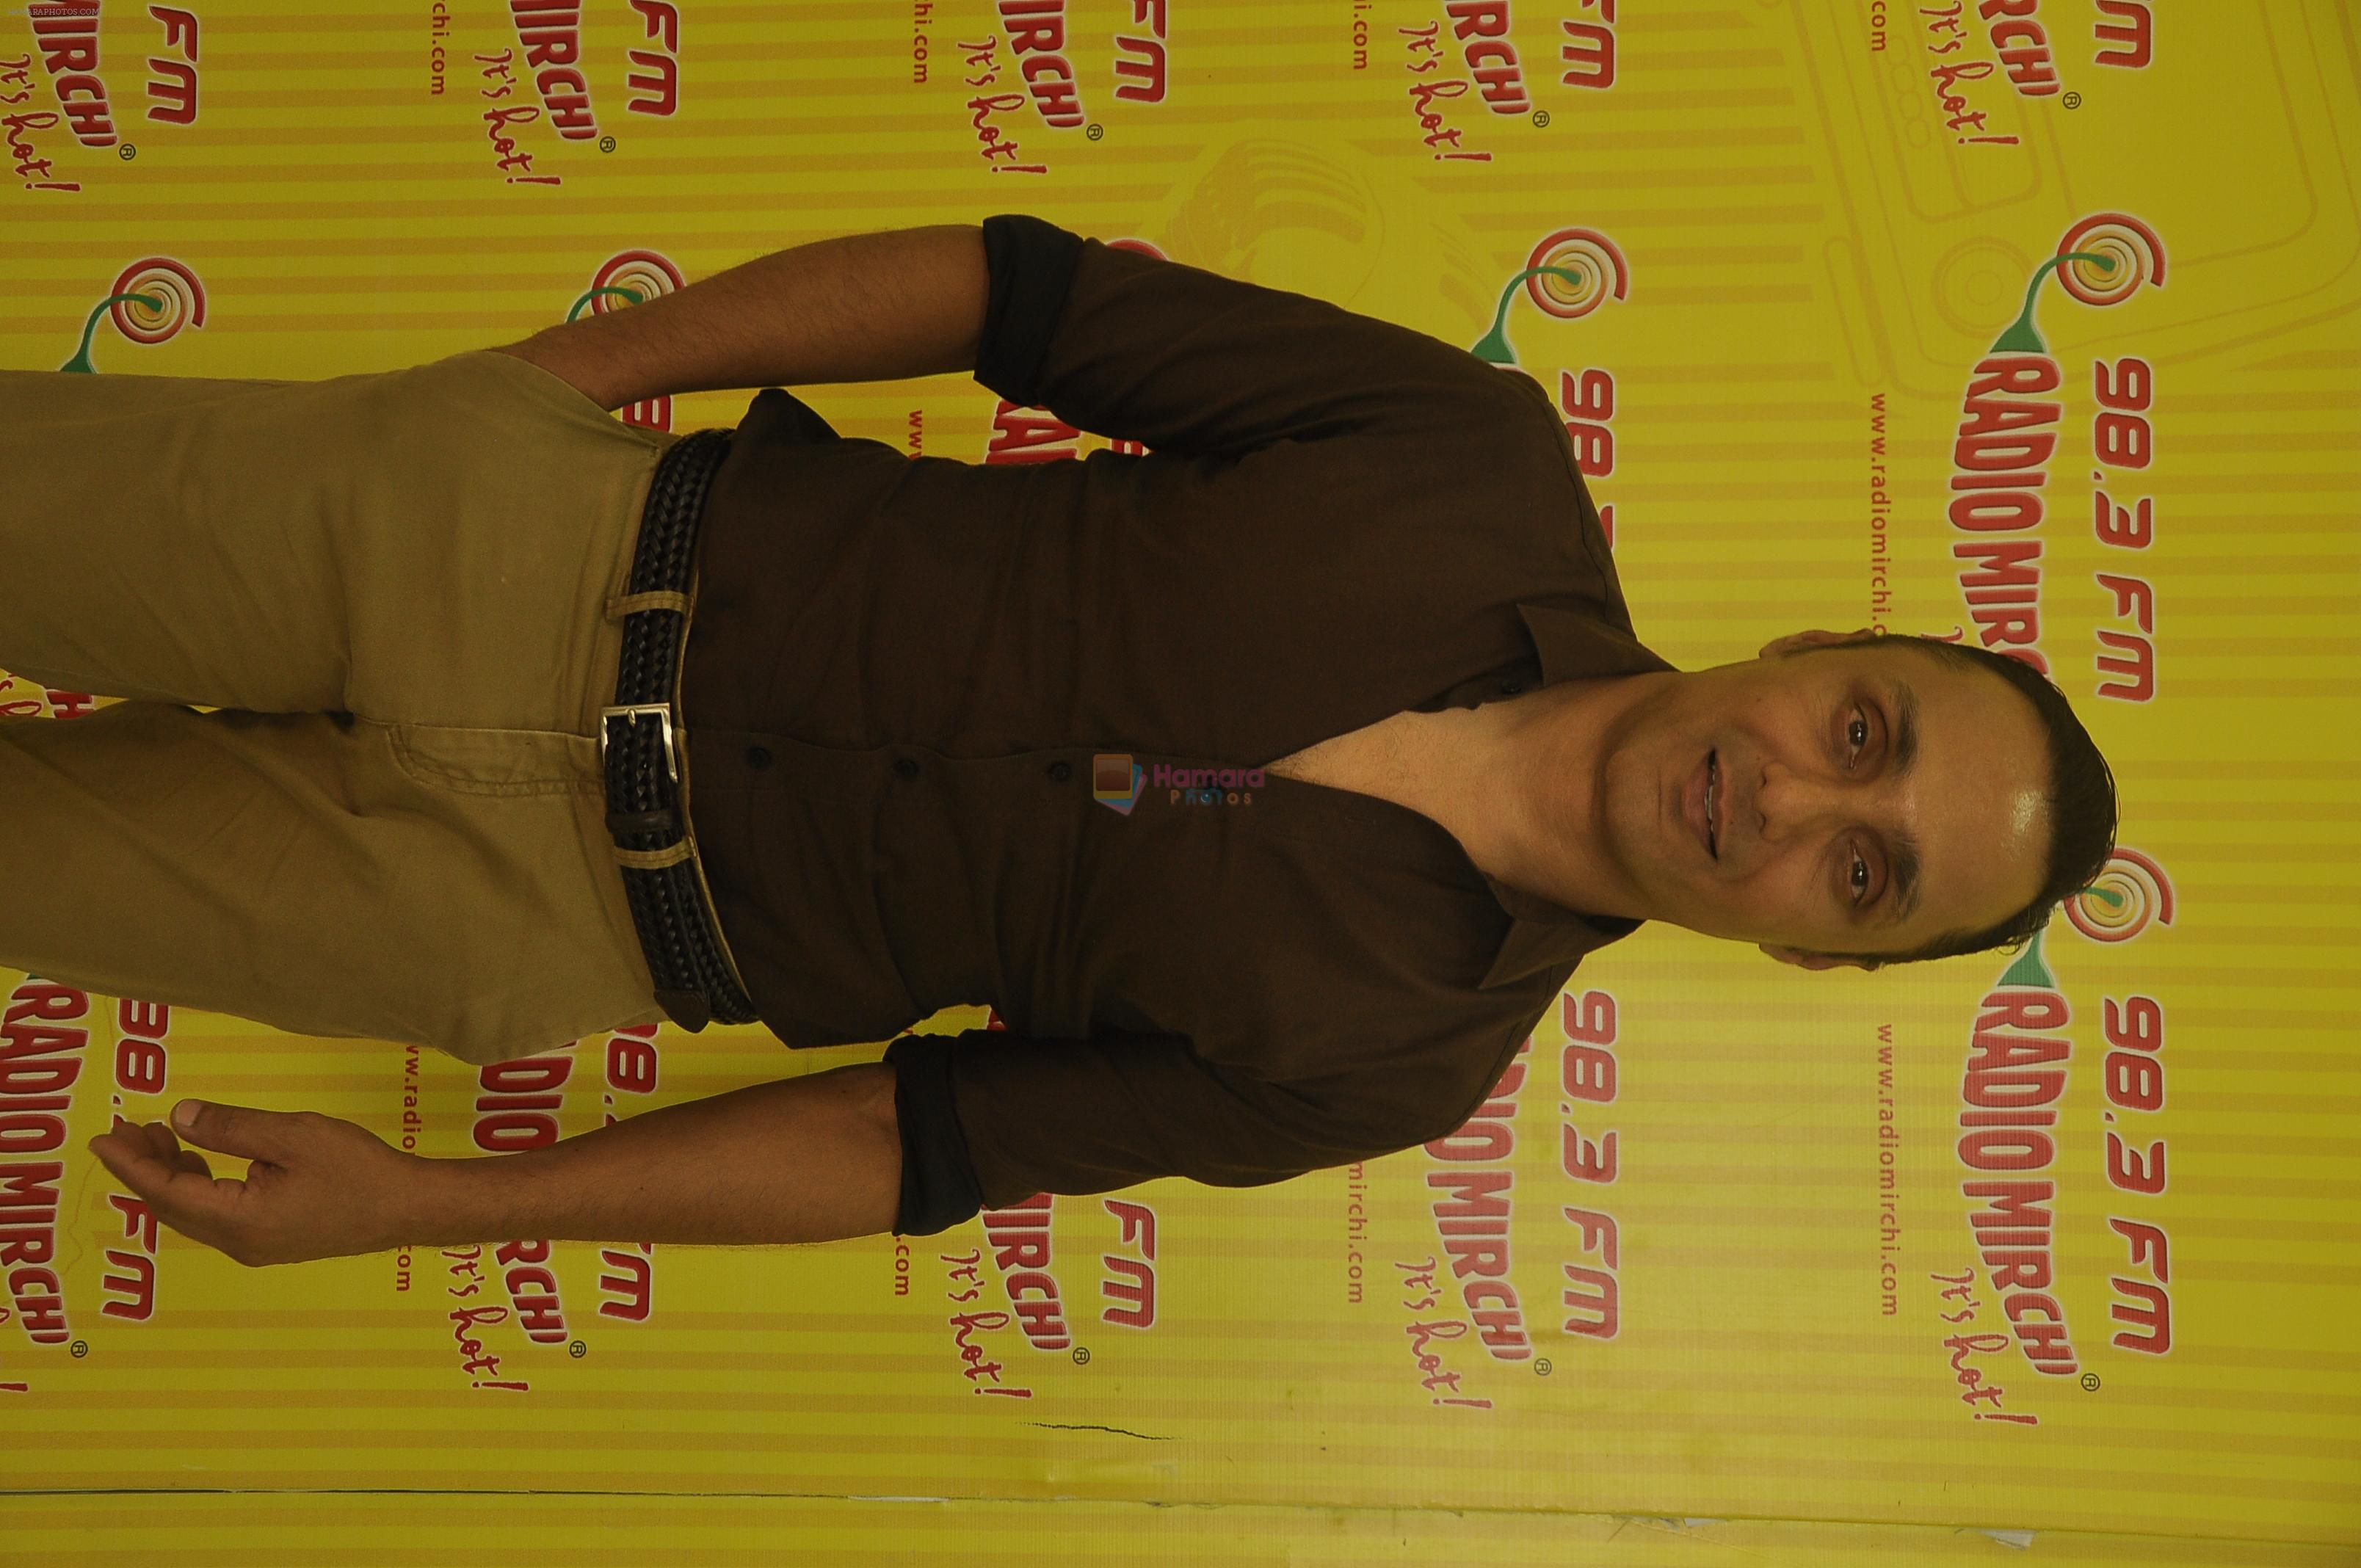 Rahul Bose at Radio Mirchi 98.3 FM on 17th July 2015